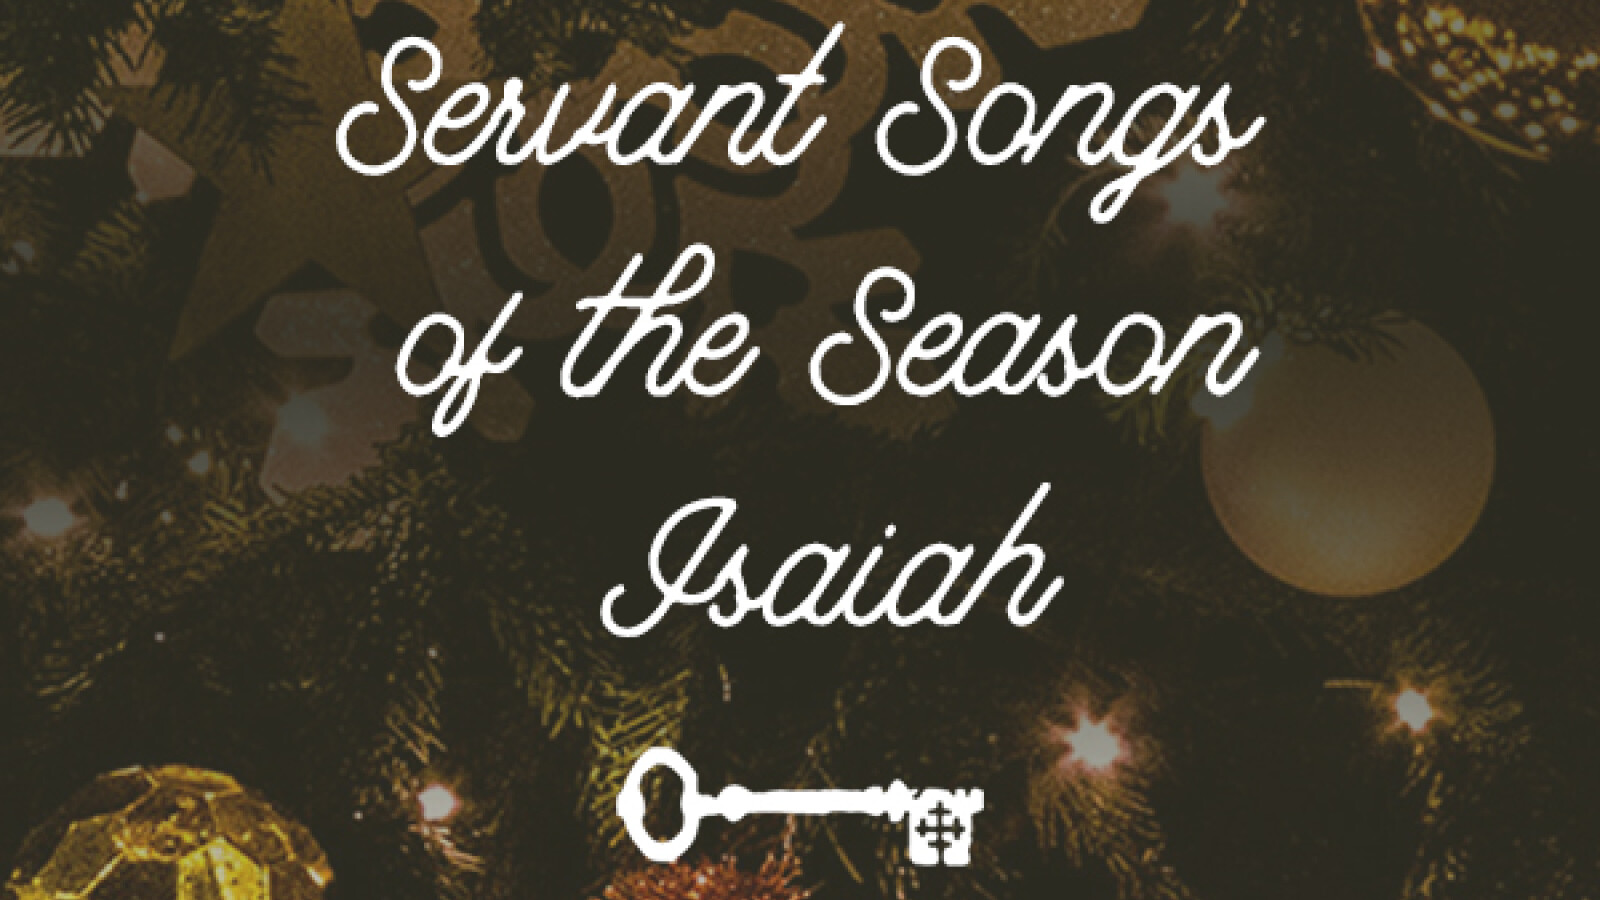 Servant Songs of the Season: Isaiah